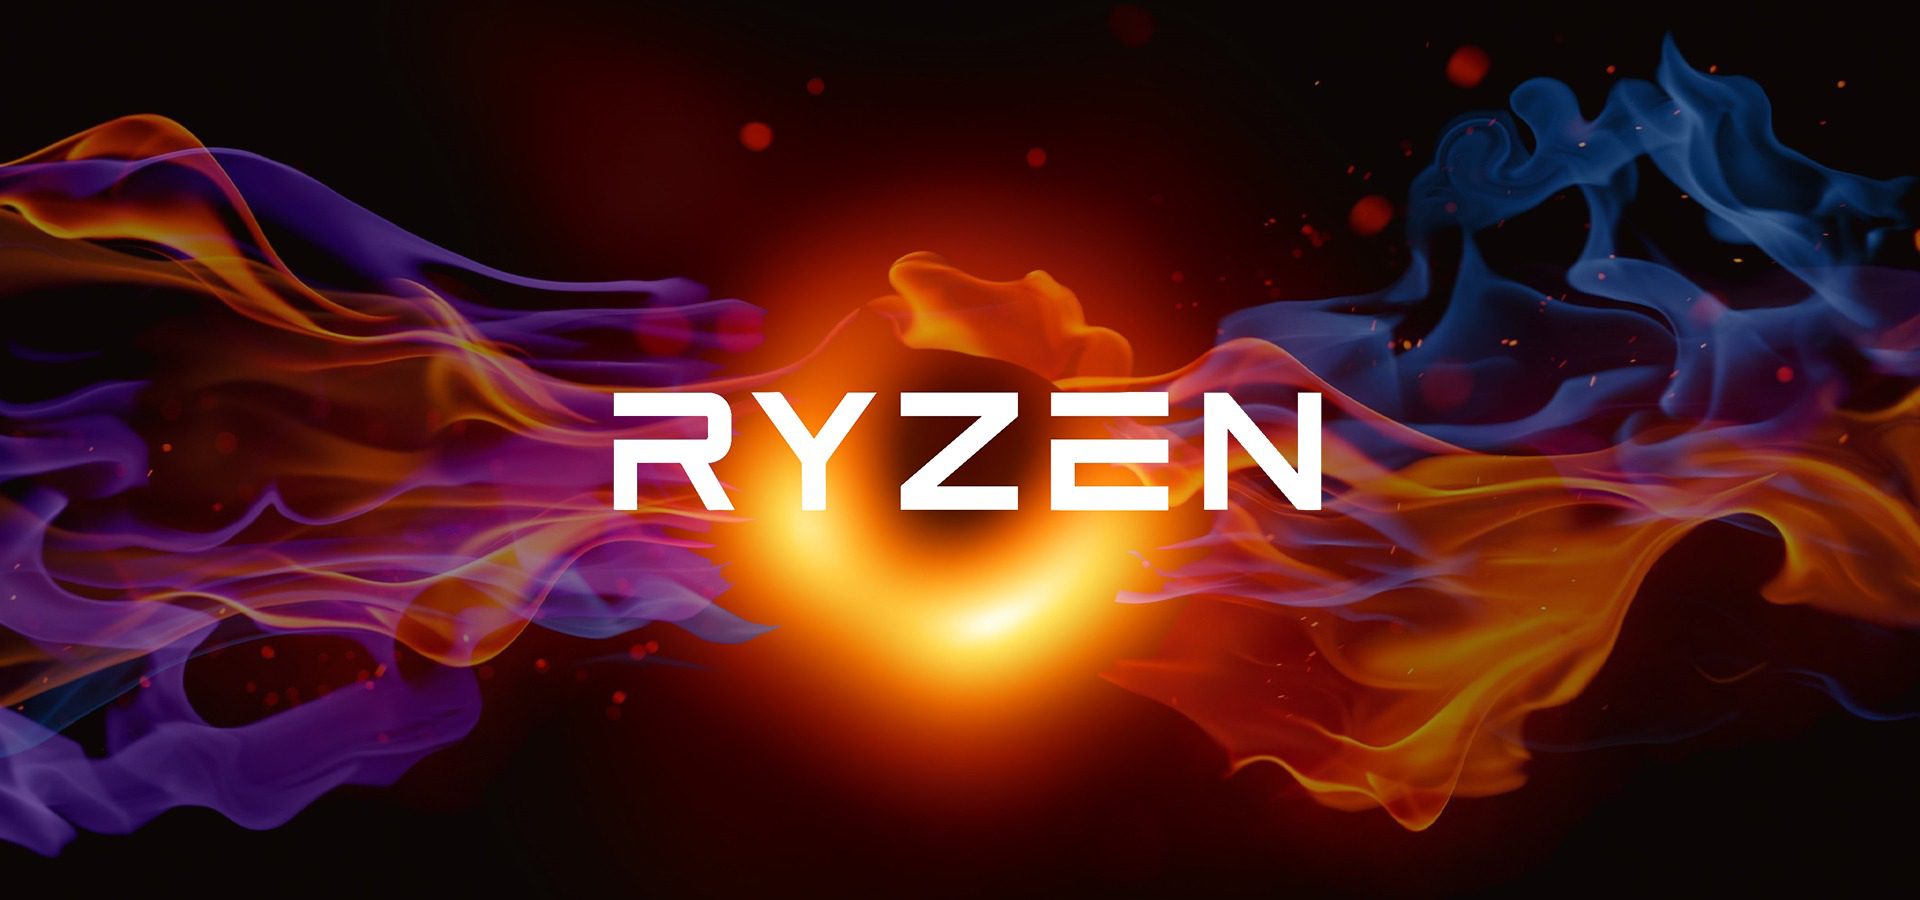 AMD Ryzen on Twitter AMDRedTeam is as it again Red Team Member  BeepBeep2 rendered this Ryzen Wallpaper in 4k for you to use  httpstcoUSkxxNgURo httpstcokeio1S9Pcs  Twitter